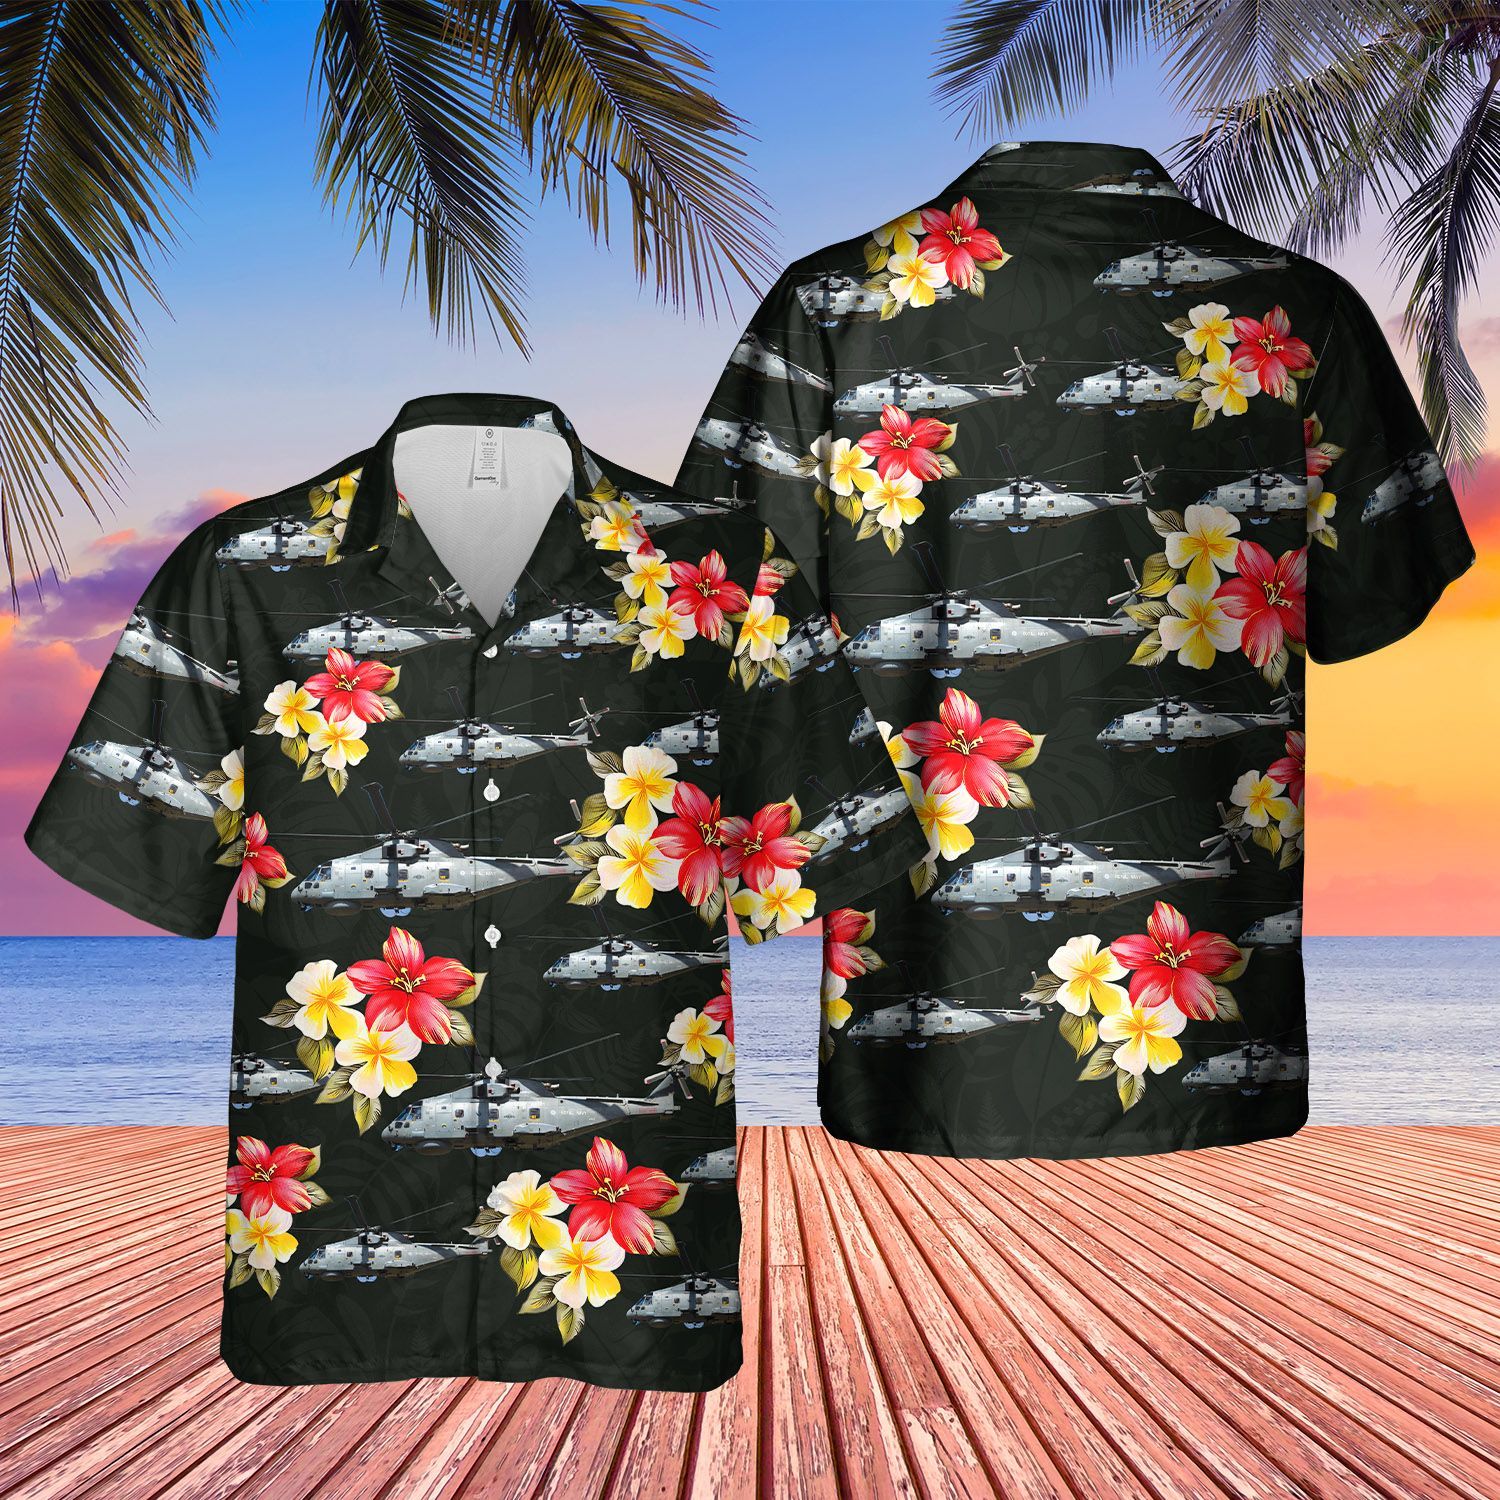 Enjoy your summer with top cool hawaiian shirt below 218